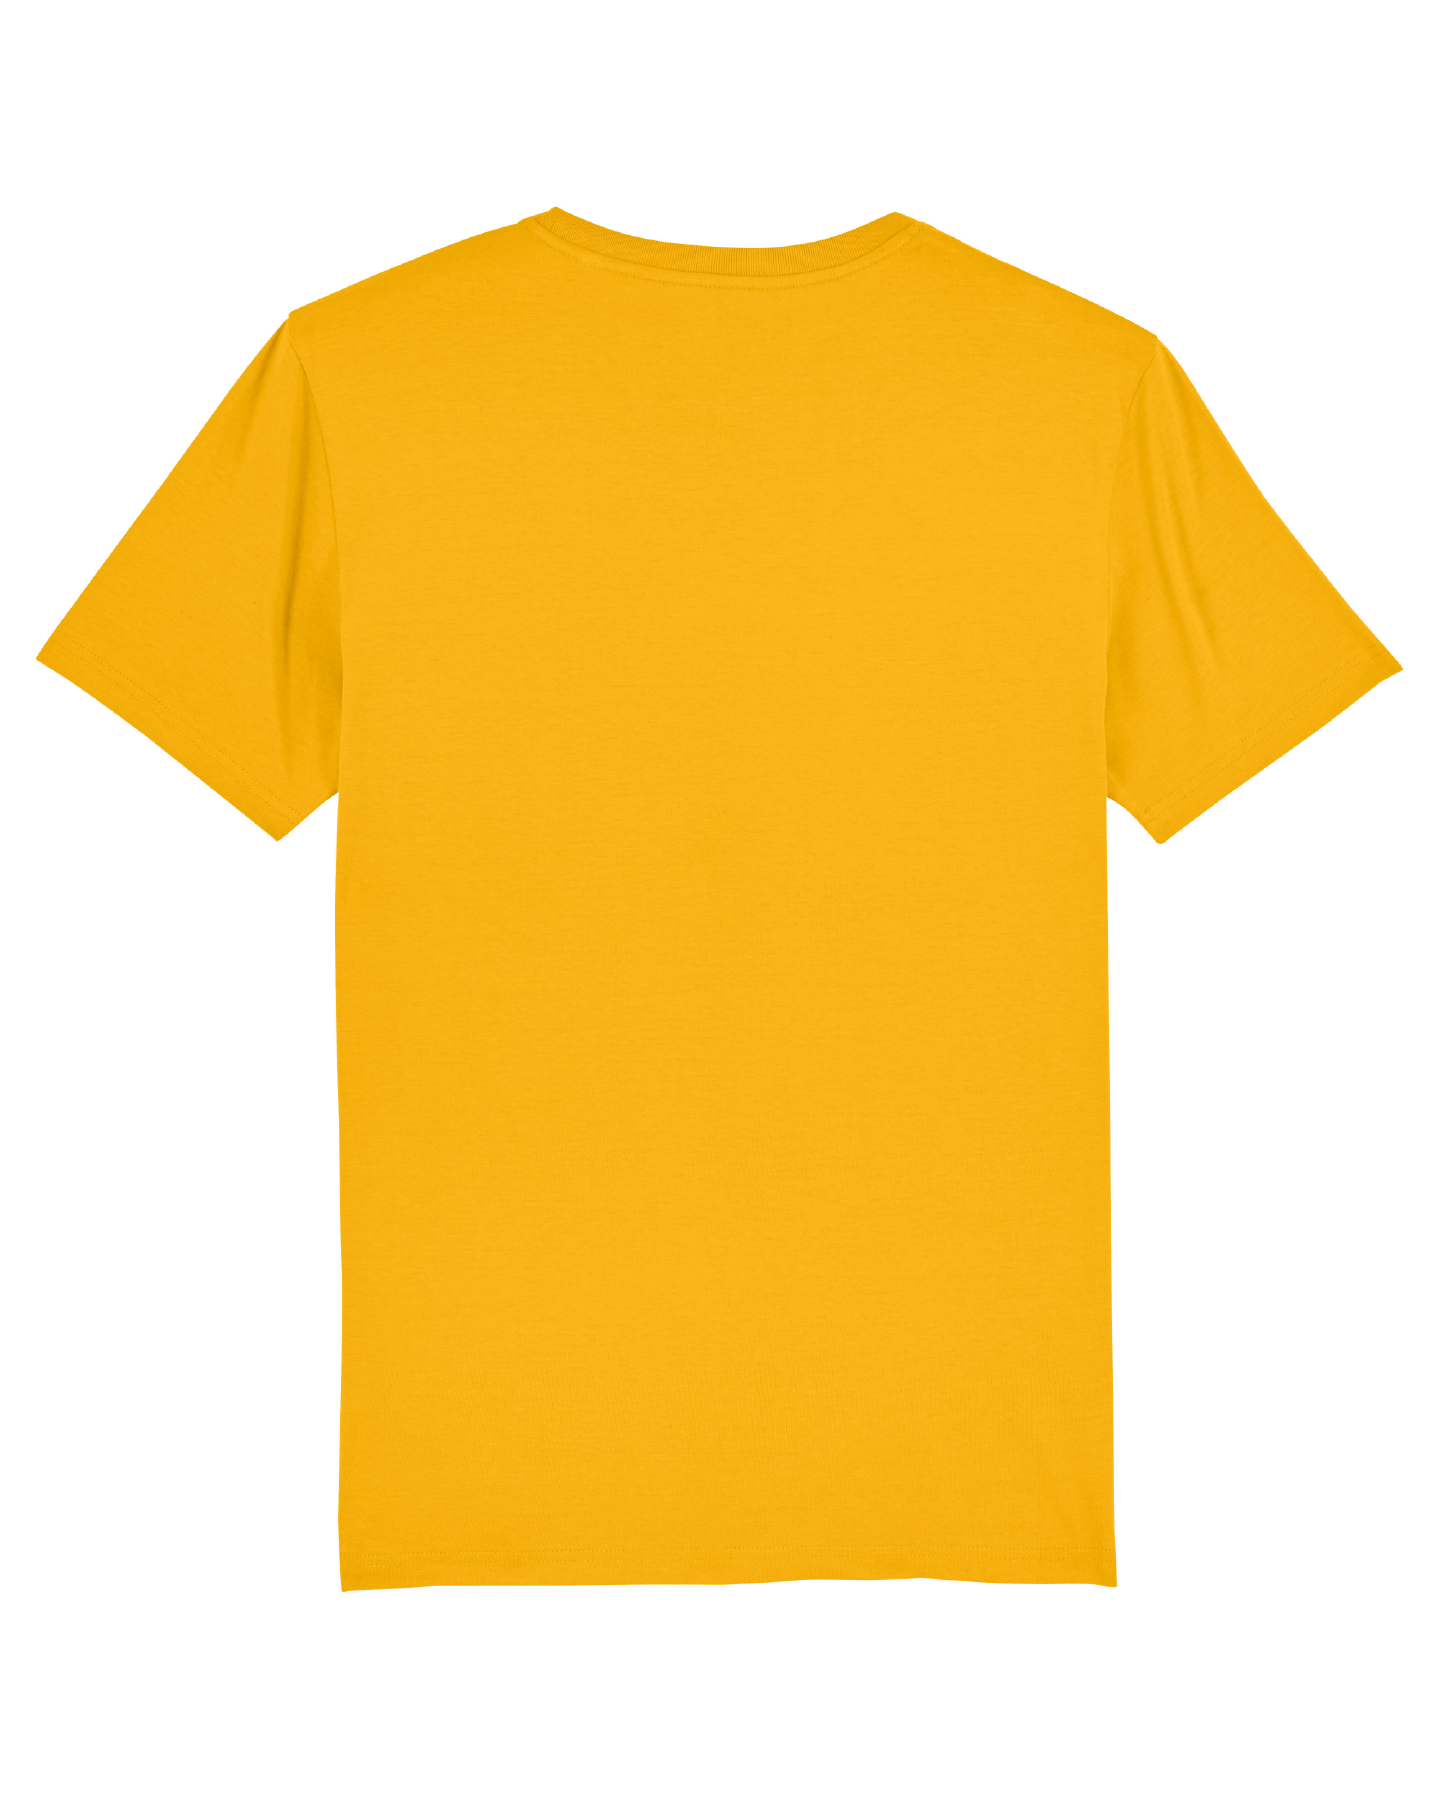 T-Shirt Herren LAUSITZ gelb